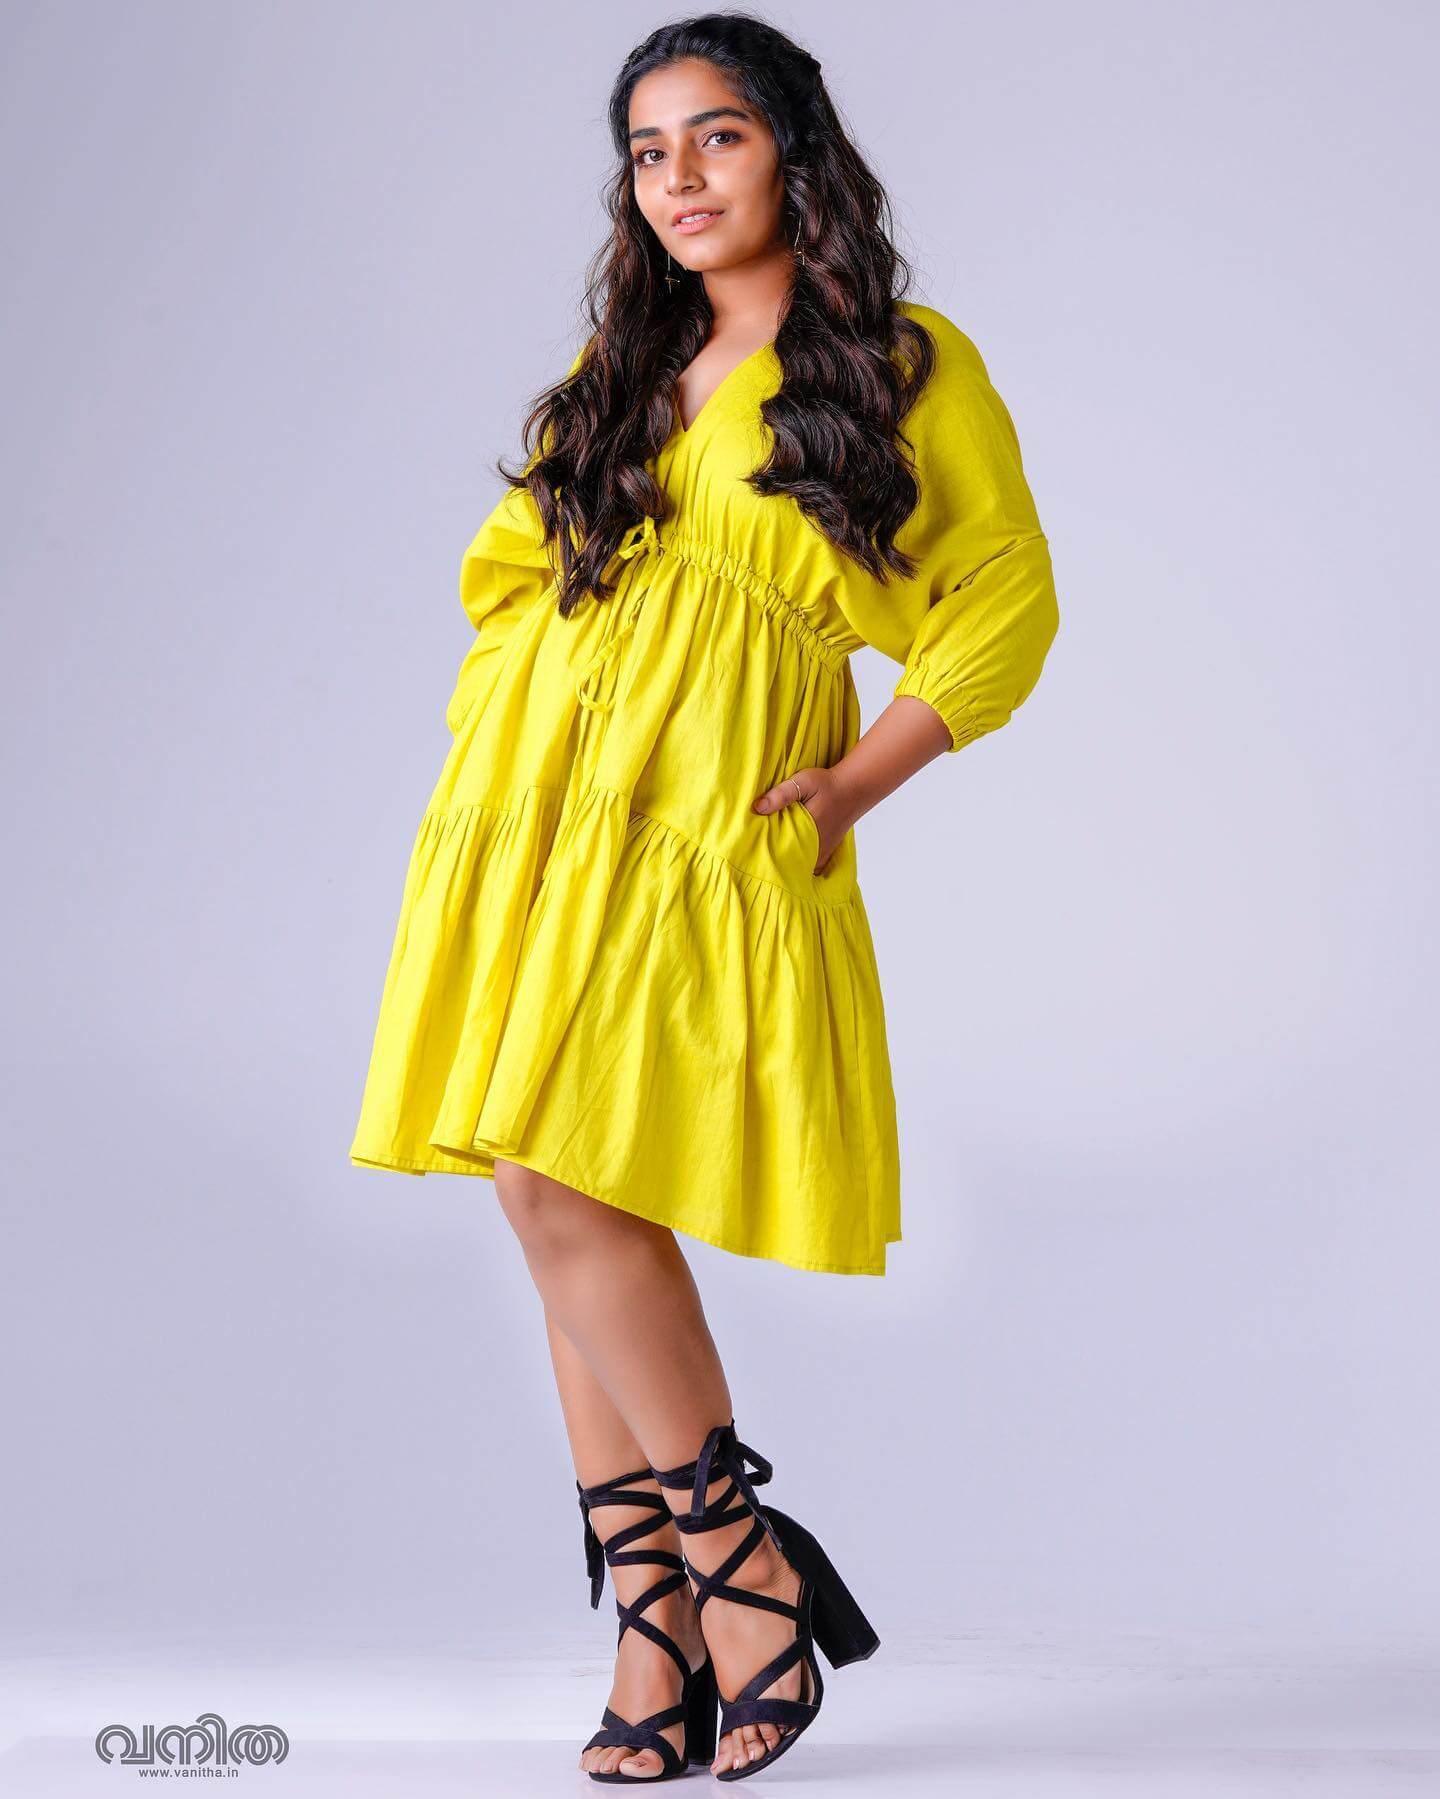 Rajisha Vijayan Look As Bright As Sunshine In Yellow Multi-Layer Dress